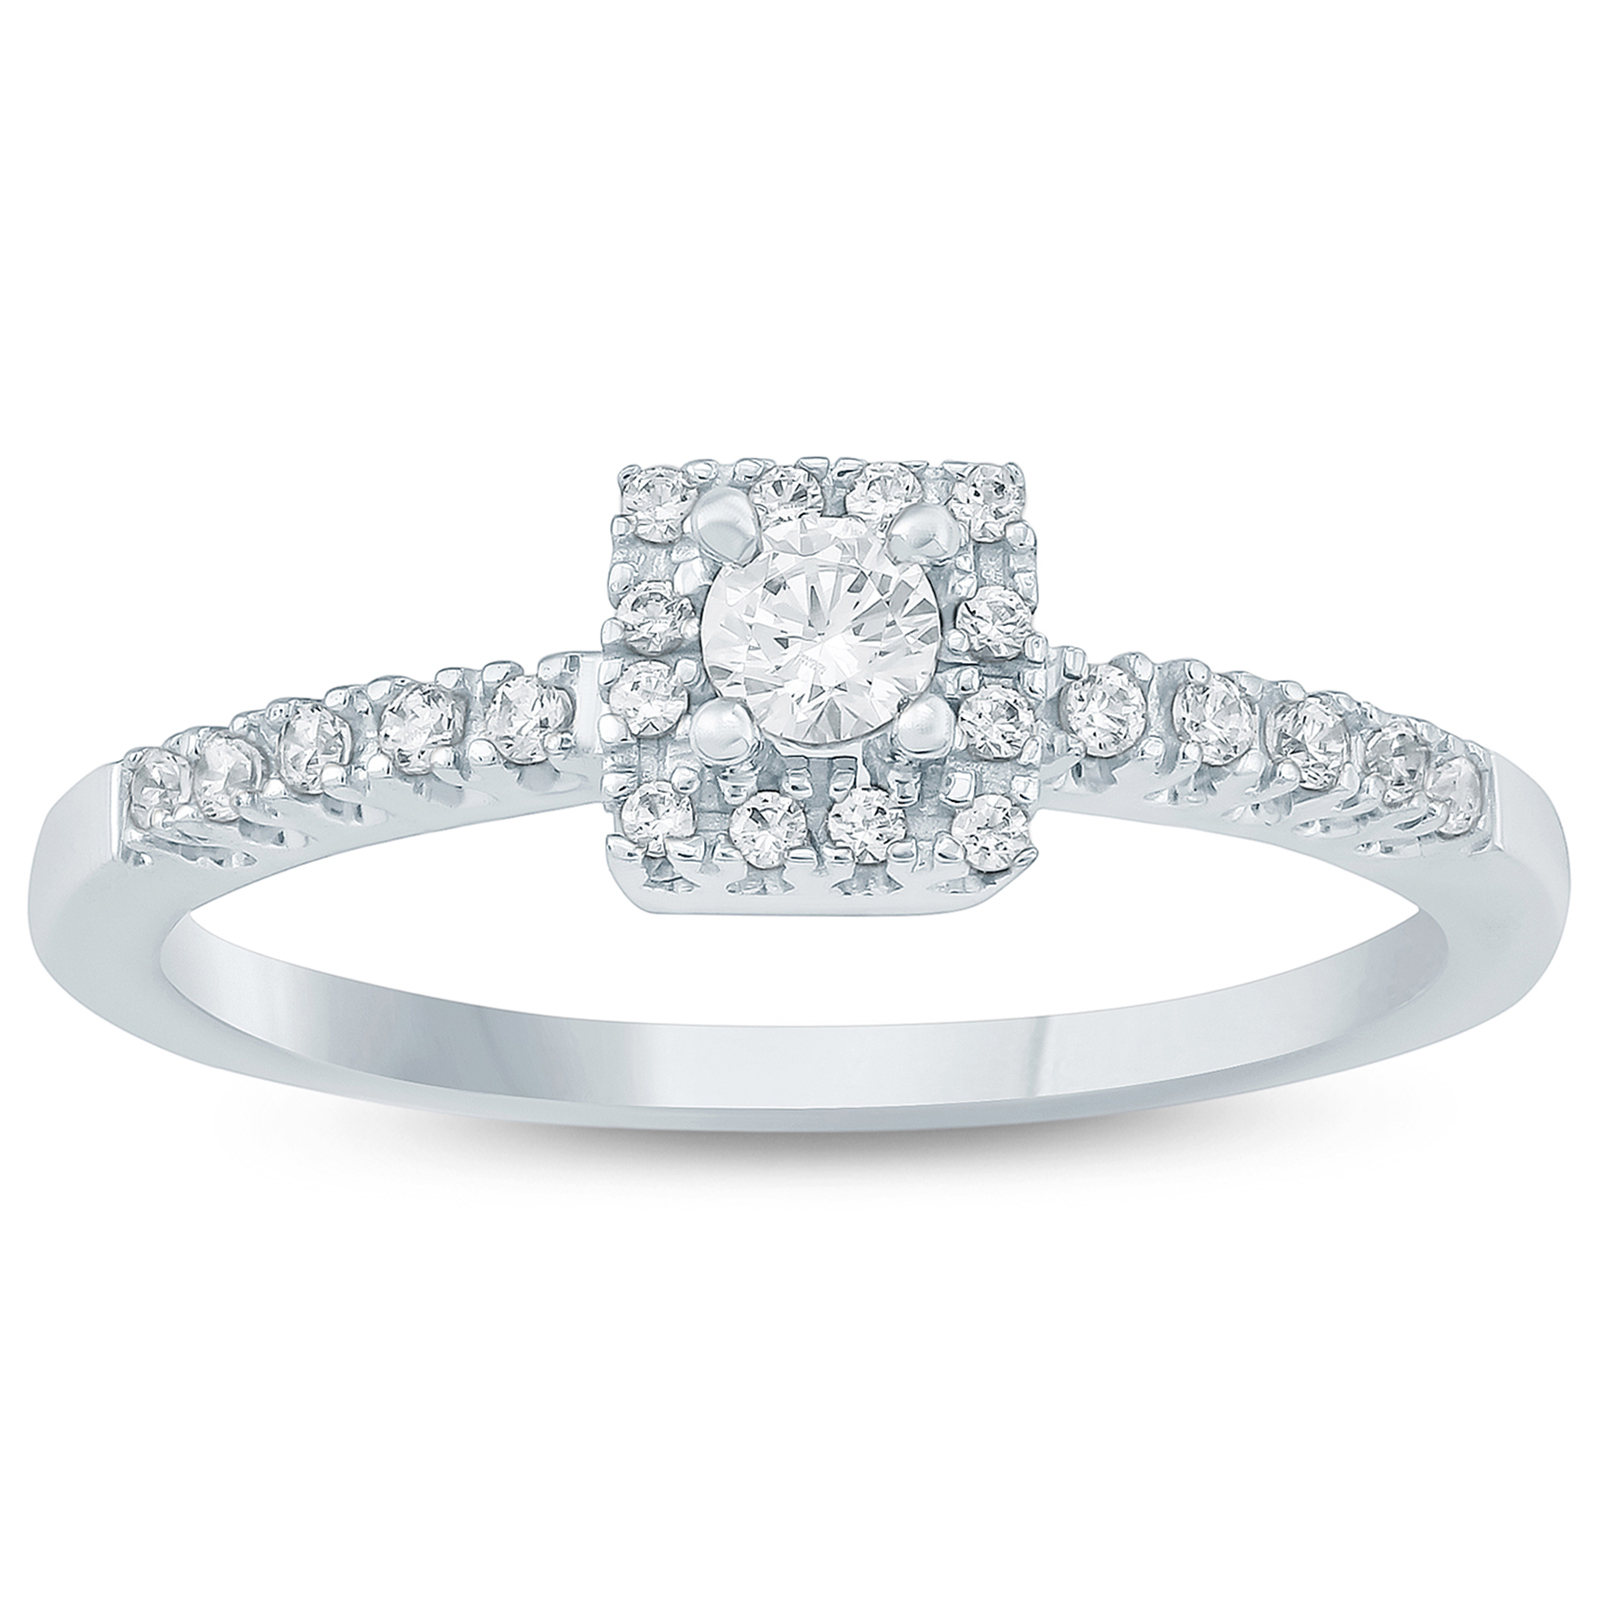 1/4 Carat TW Diamond Engagement Ring in 10K White Gold